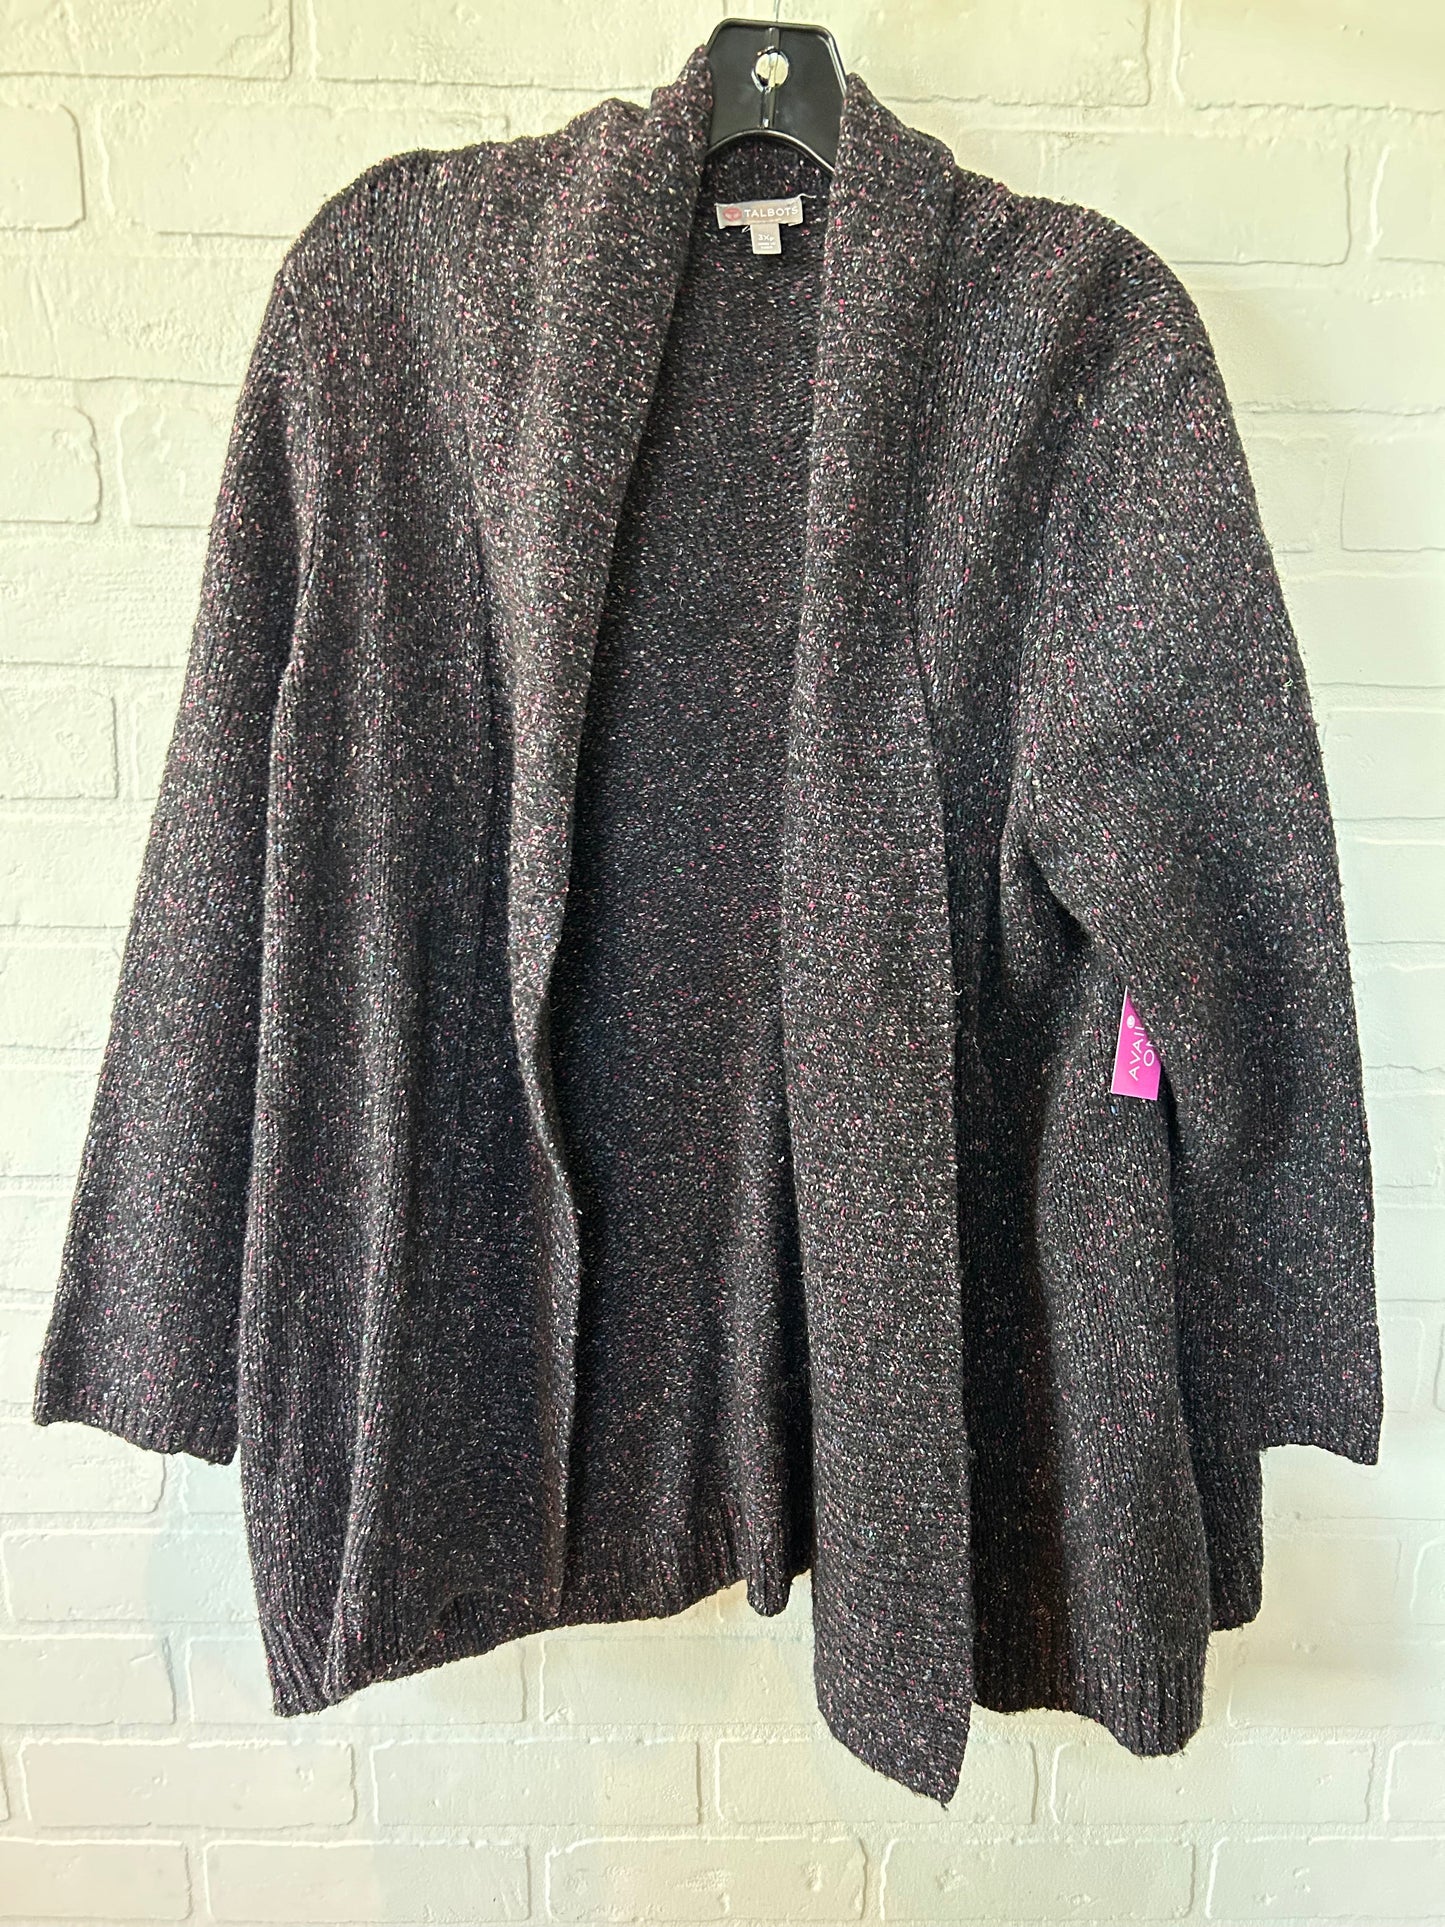 Black Sweater Cardigan Talbots, Size 3x